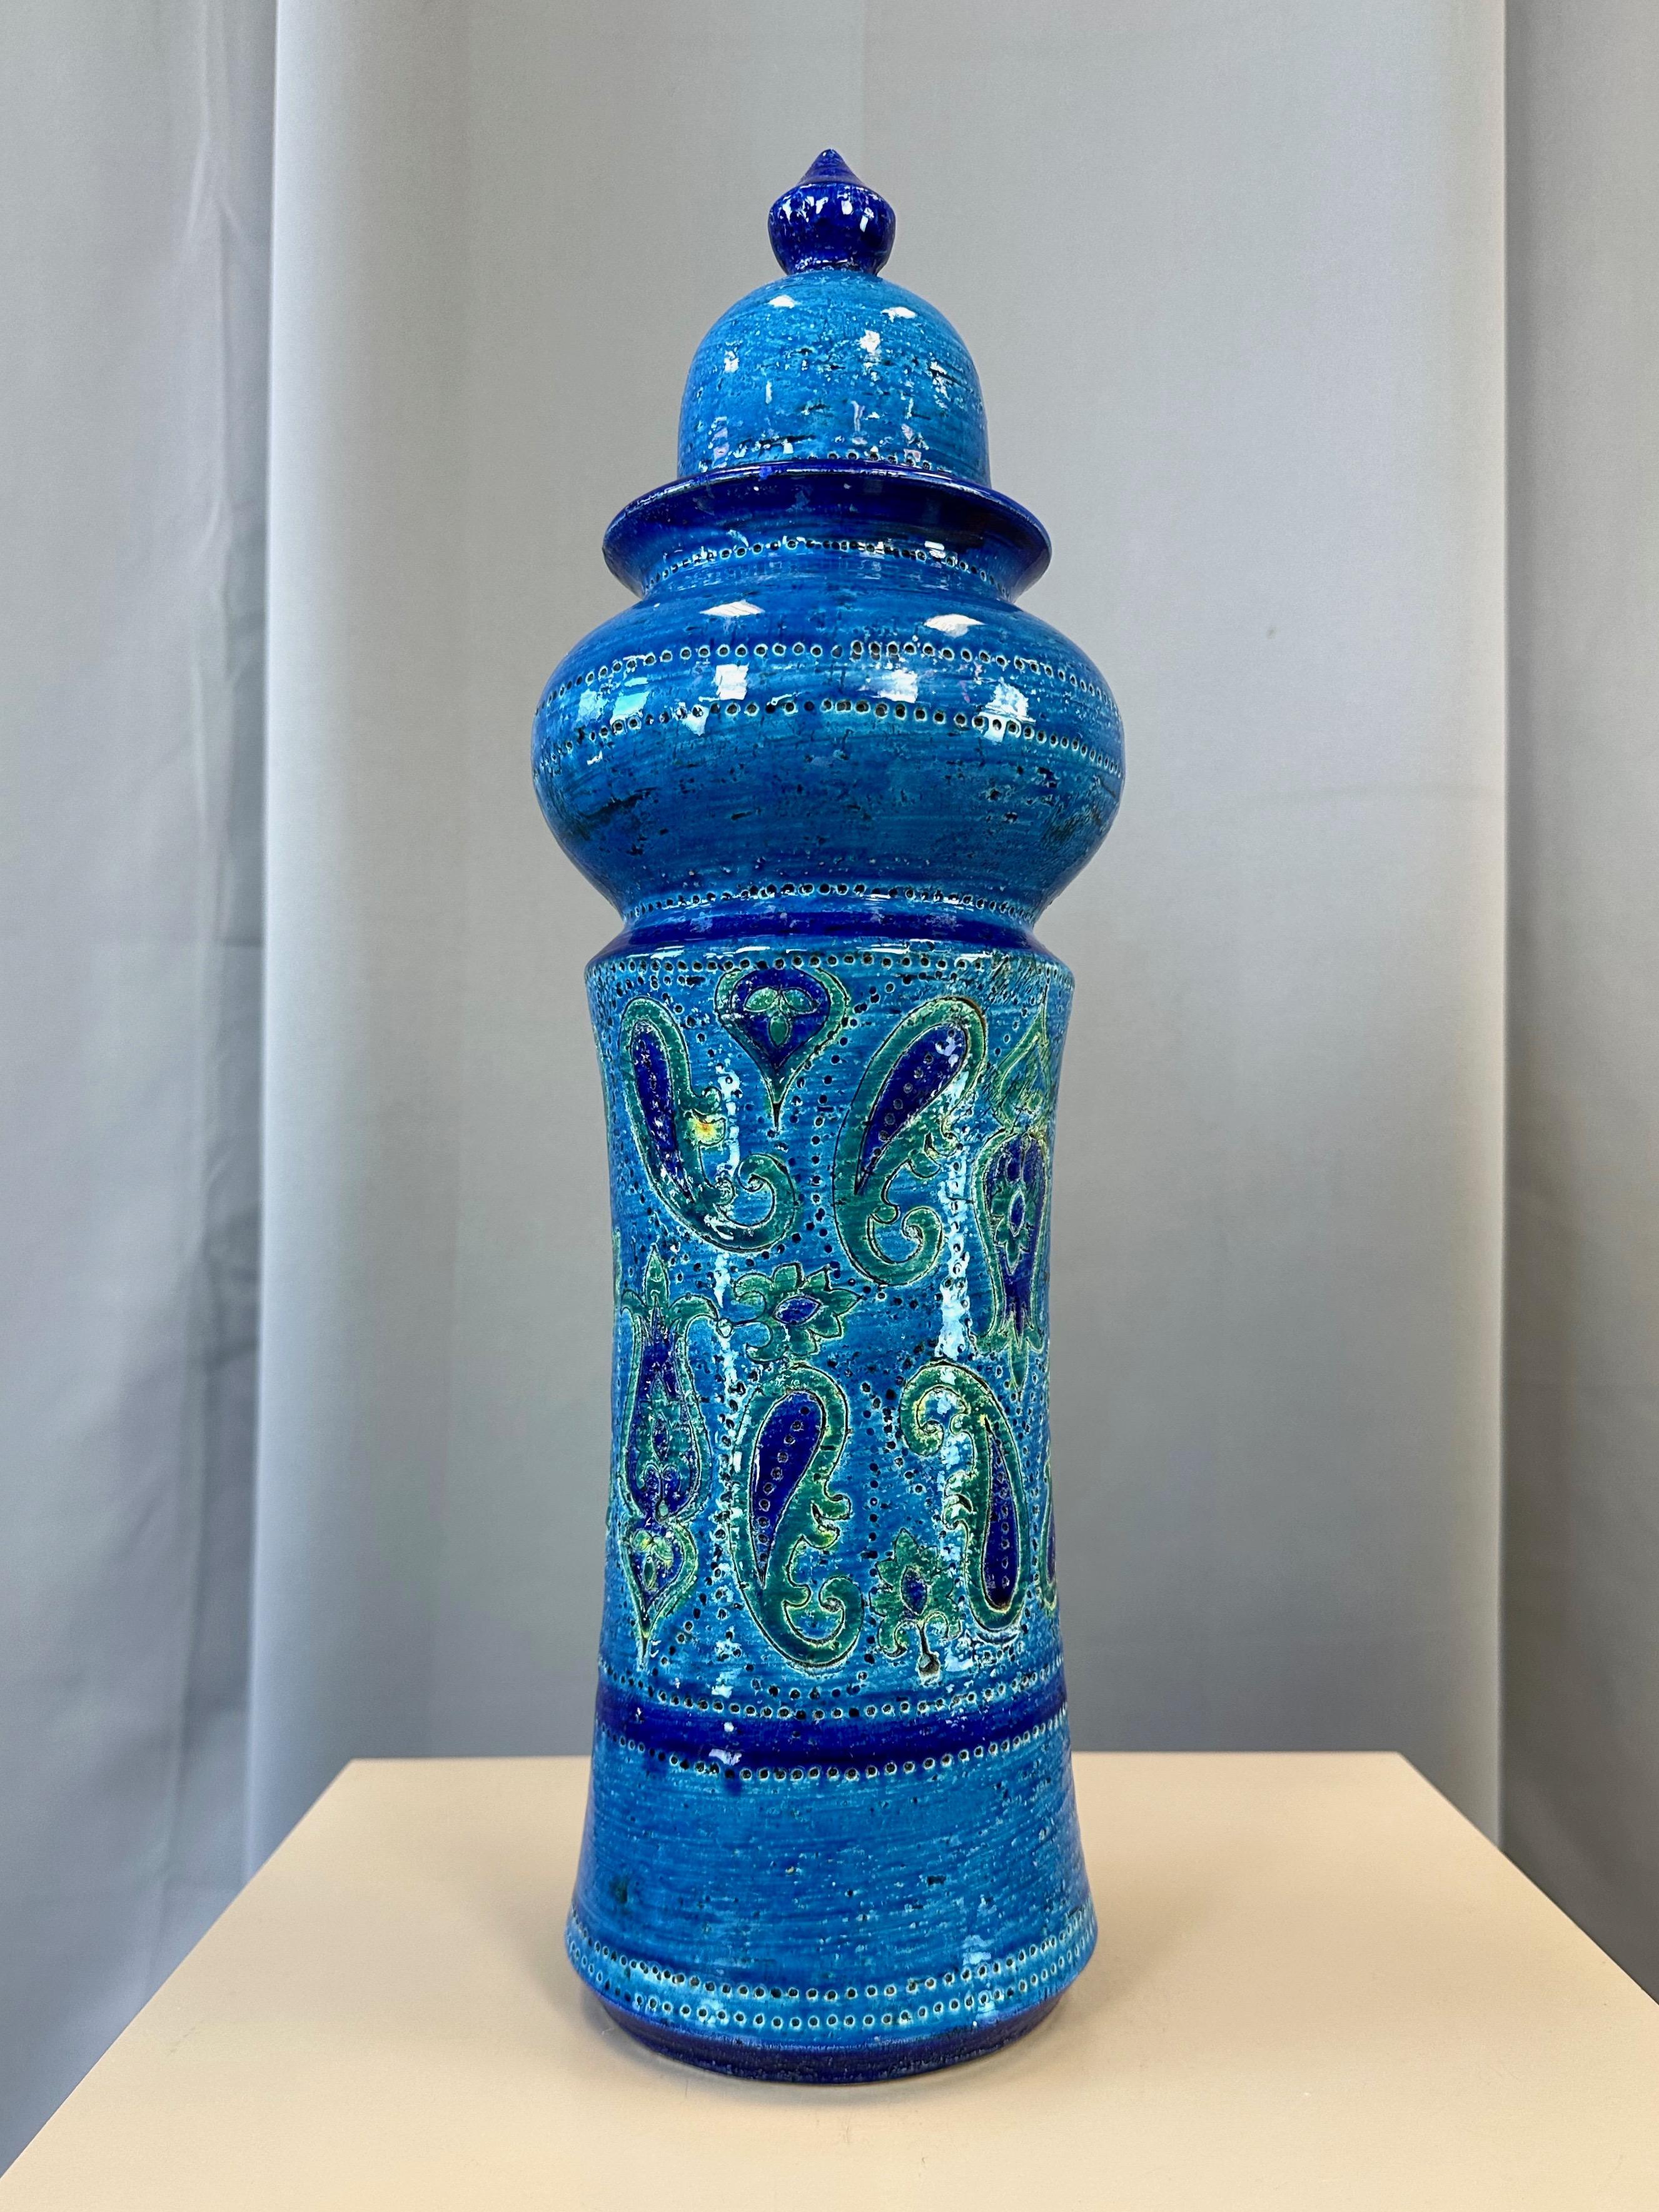 Glazed Aldo Londi for Bitossi Rimini Blue Tall Lidded Jar, 1960s For Sale